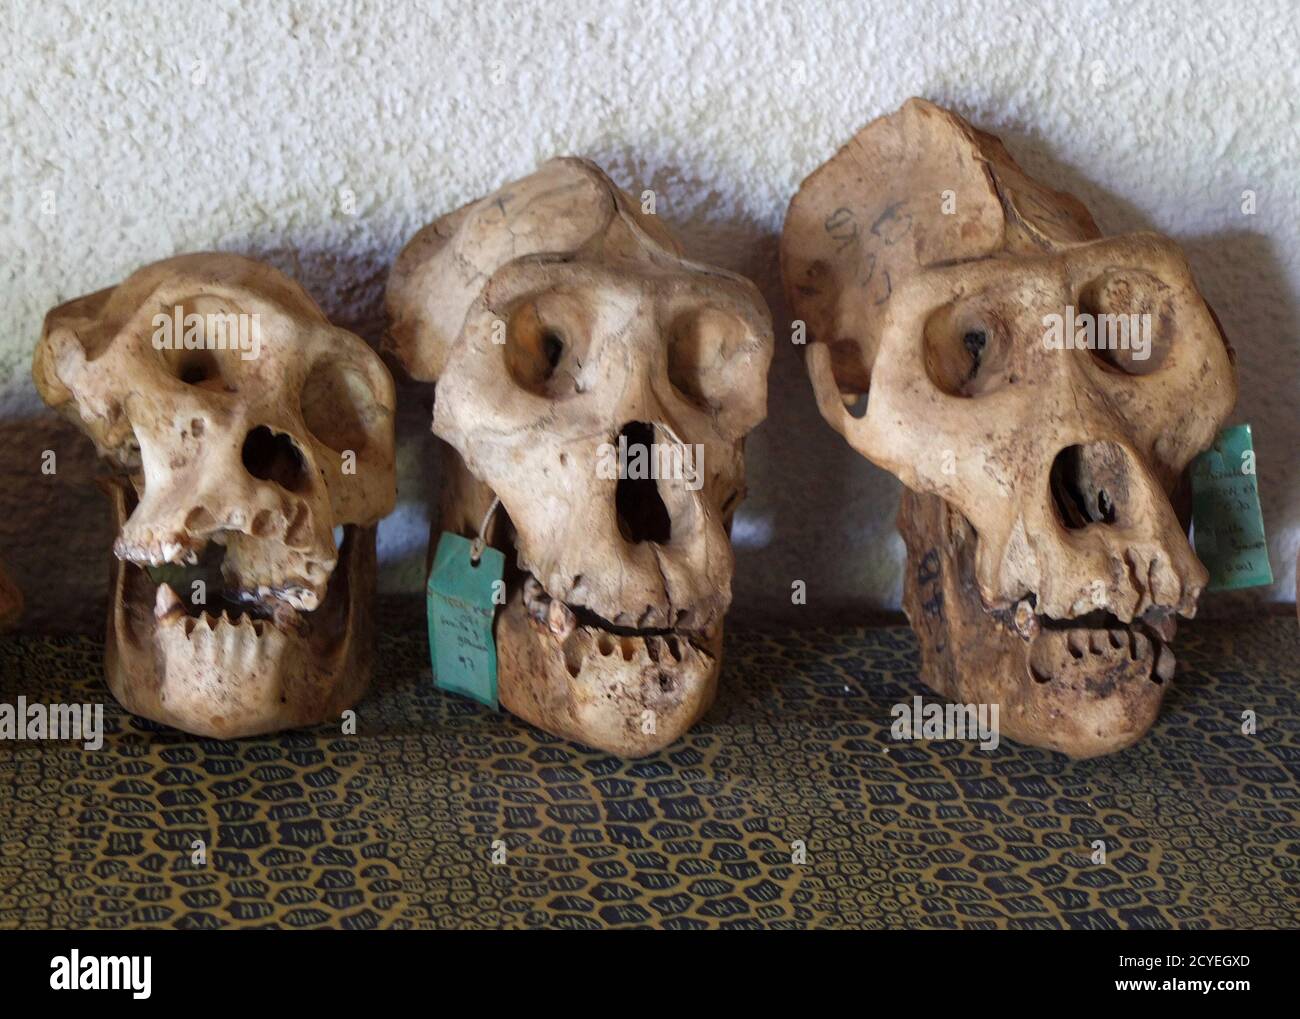 gigantopithecus blacki skull